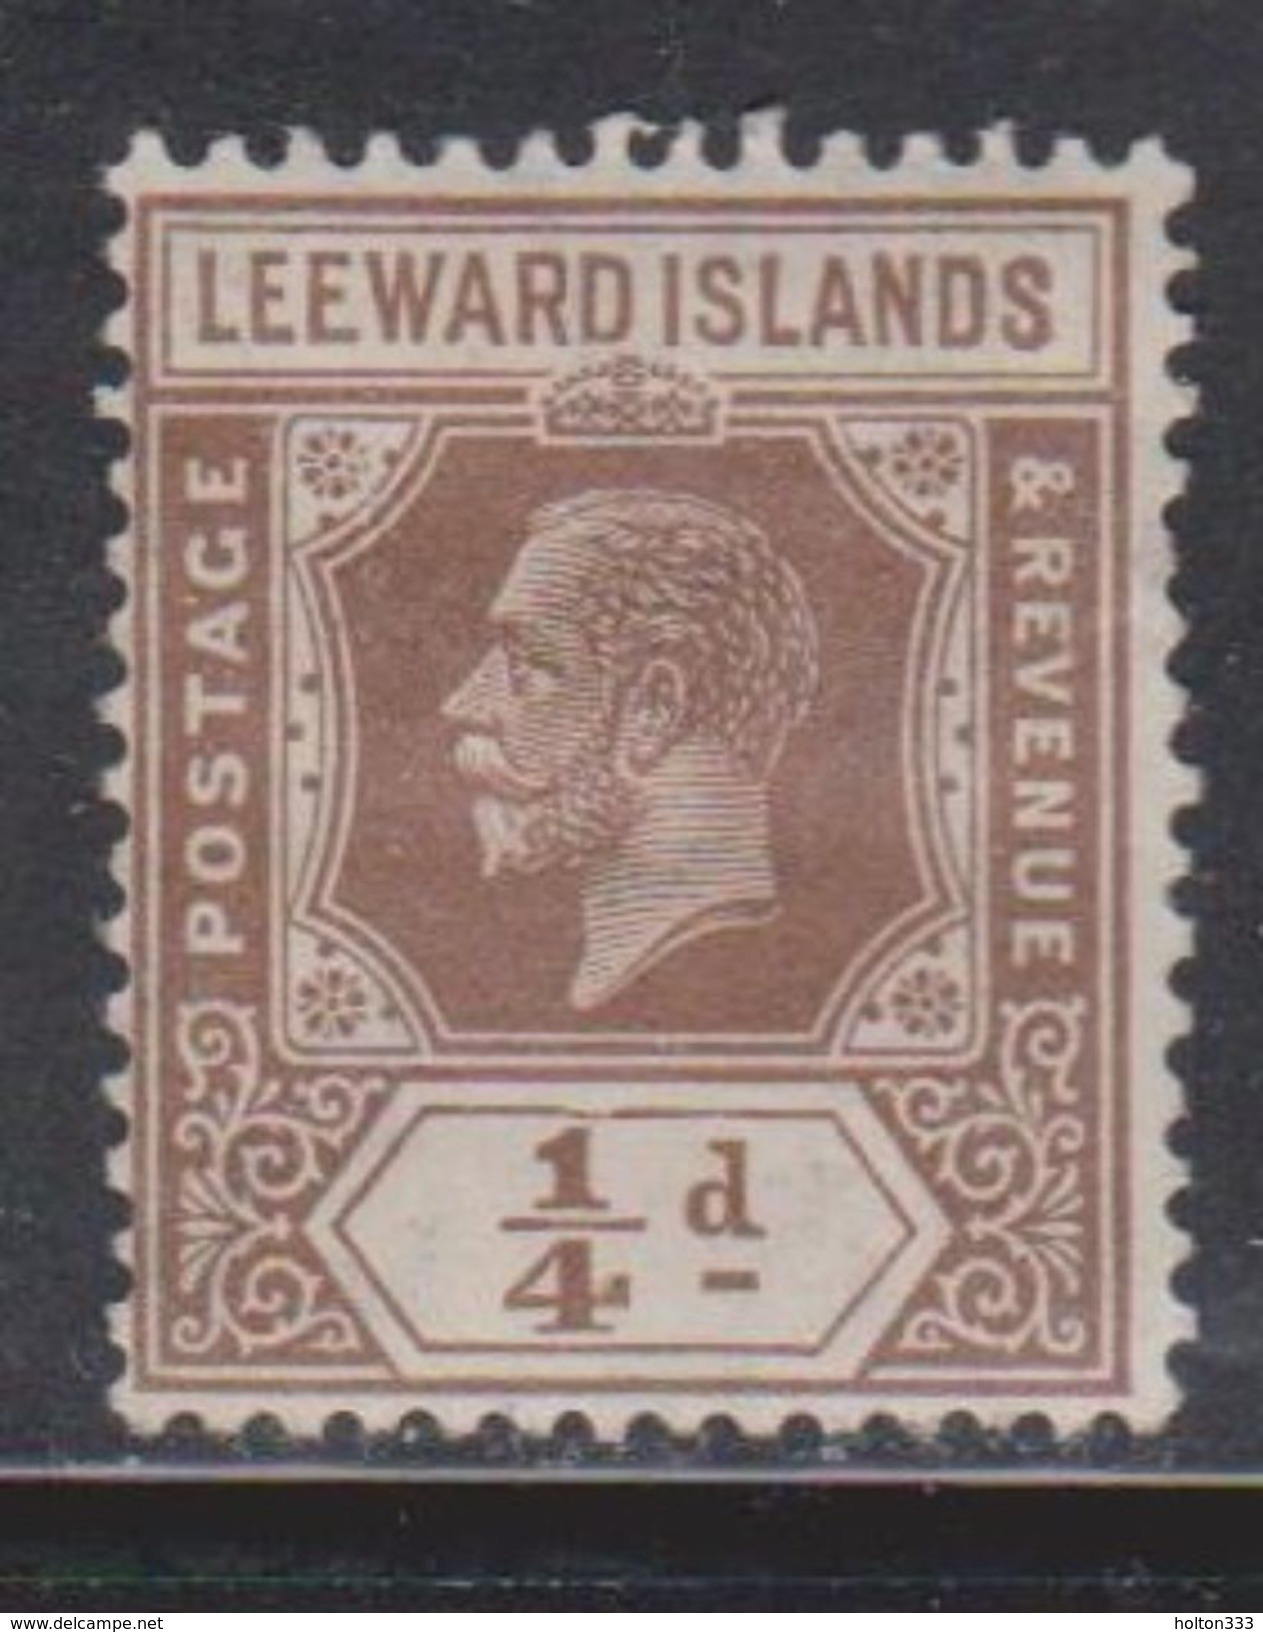 LEEWARD ISLANDS Scott # 61 MH - KGV Definitive - Leeward  Islands